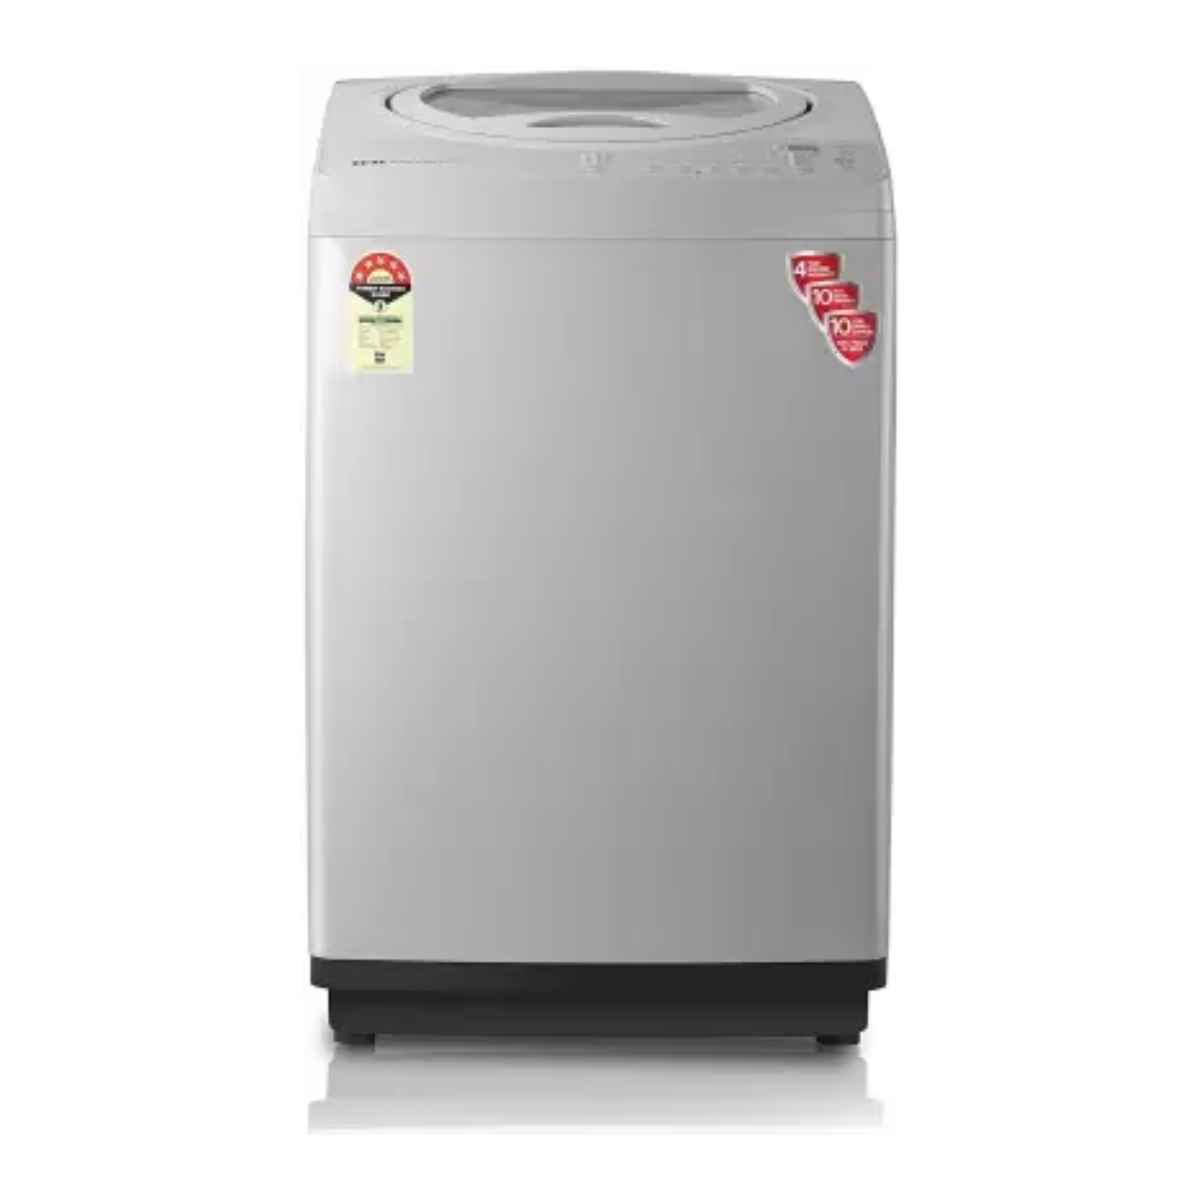 IFB 6.5 kg 3D Wash Fully Automatic Top Load washing machine (TL RSS 6.5 kg Aqua)